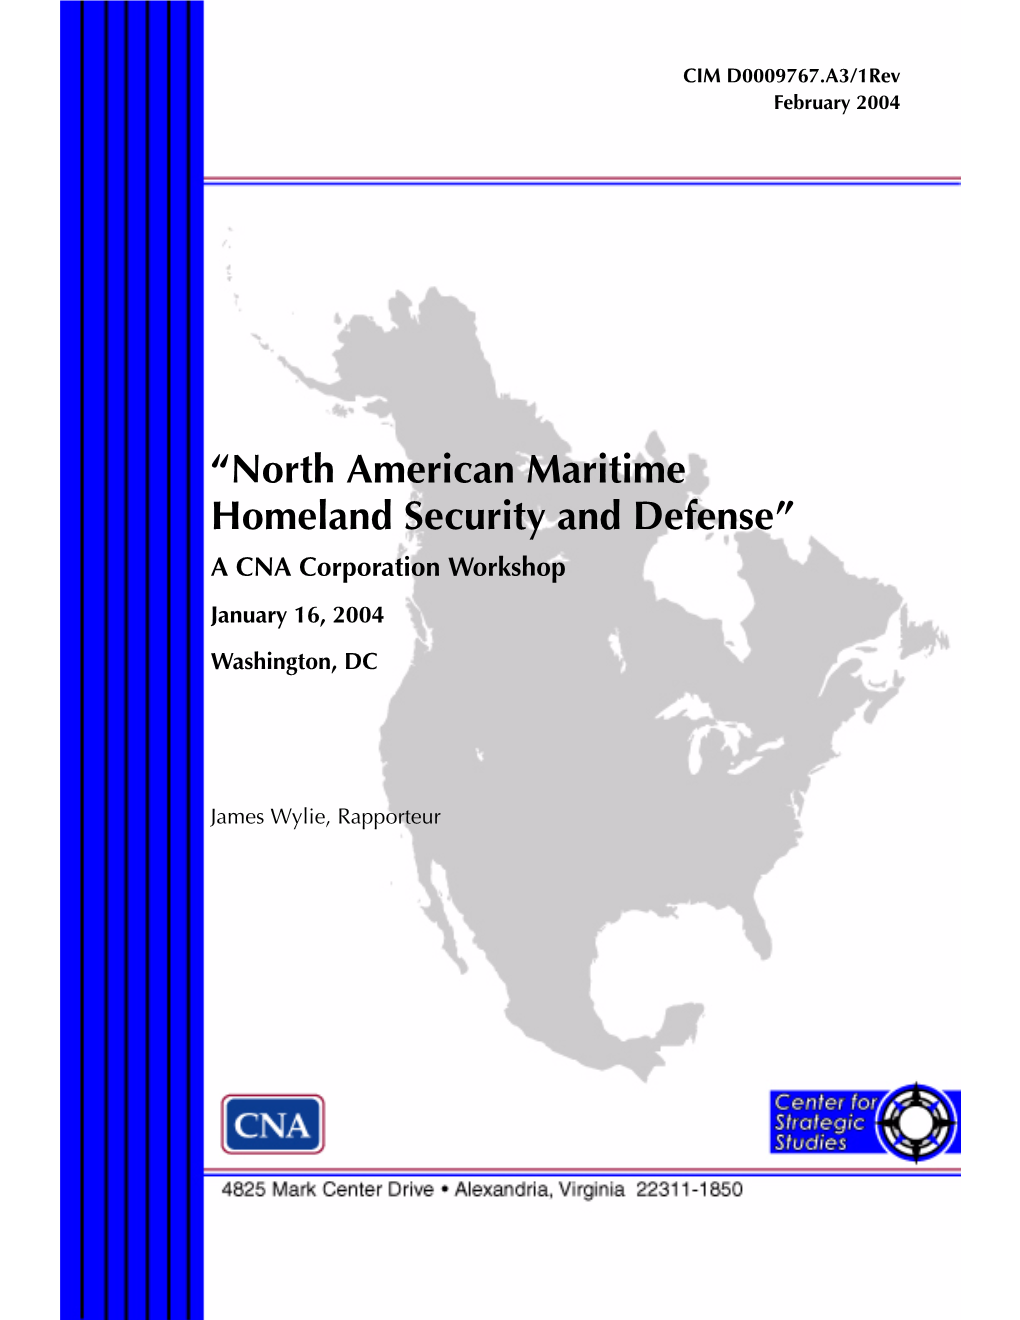 North American Maritime Homeland Security and Defense” a CNA Corporation Workshop January 16, 2004 Washington, DC